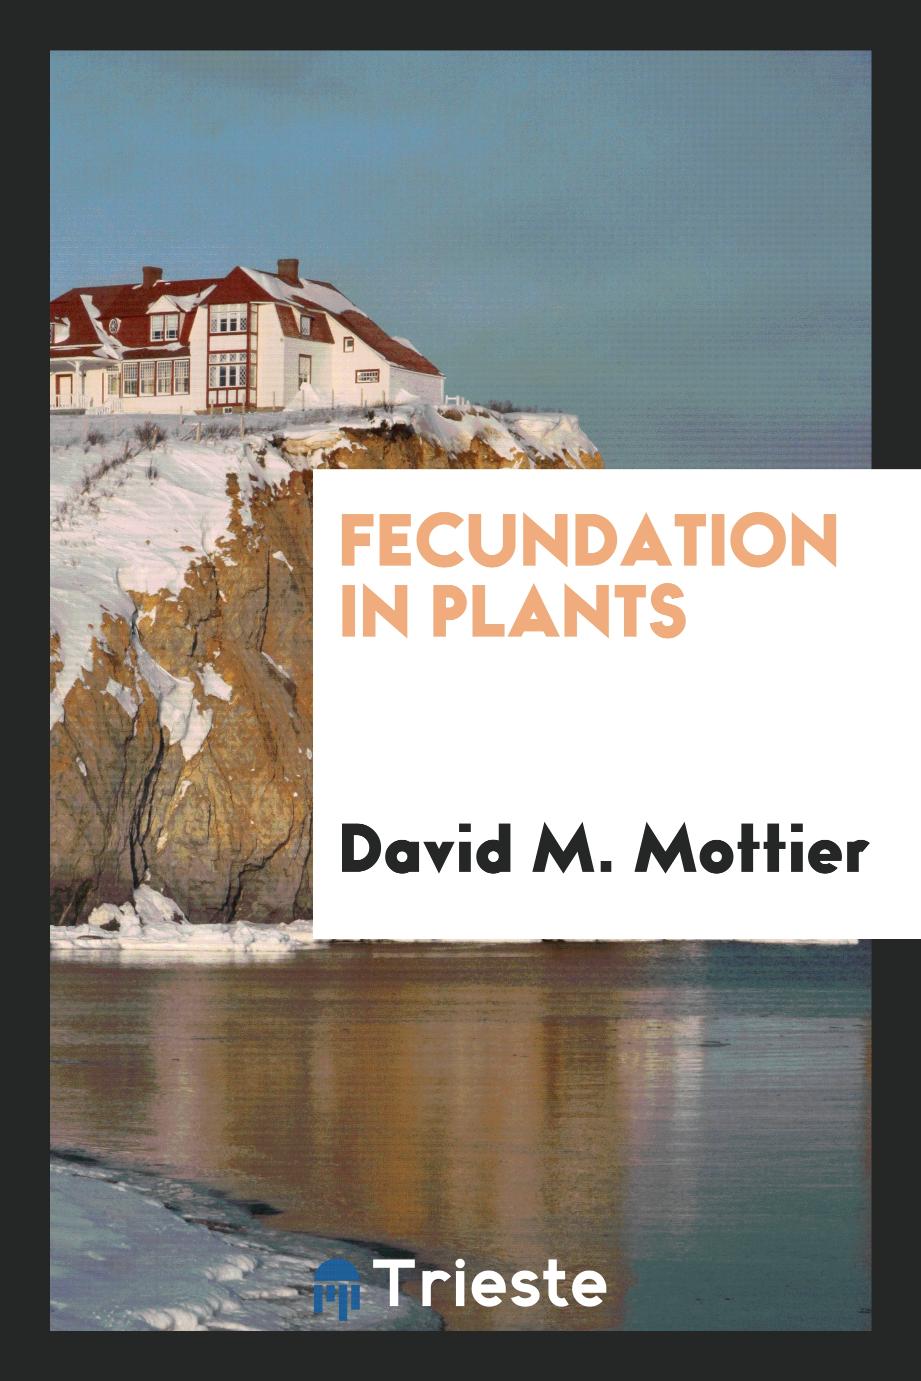 Fecundation in plants